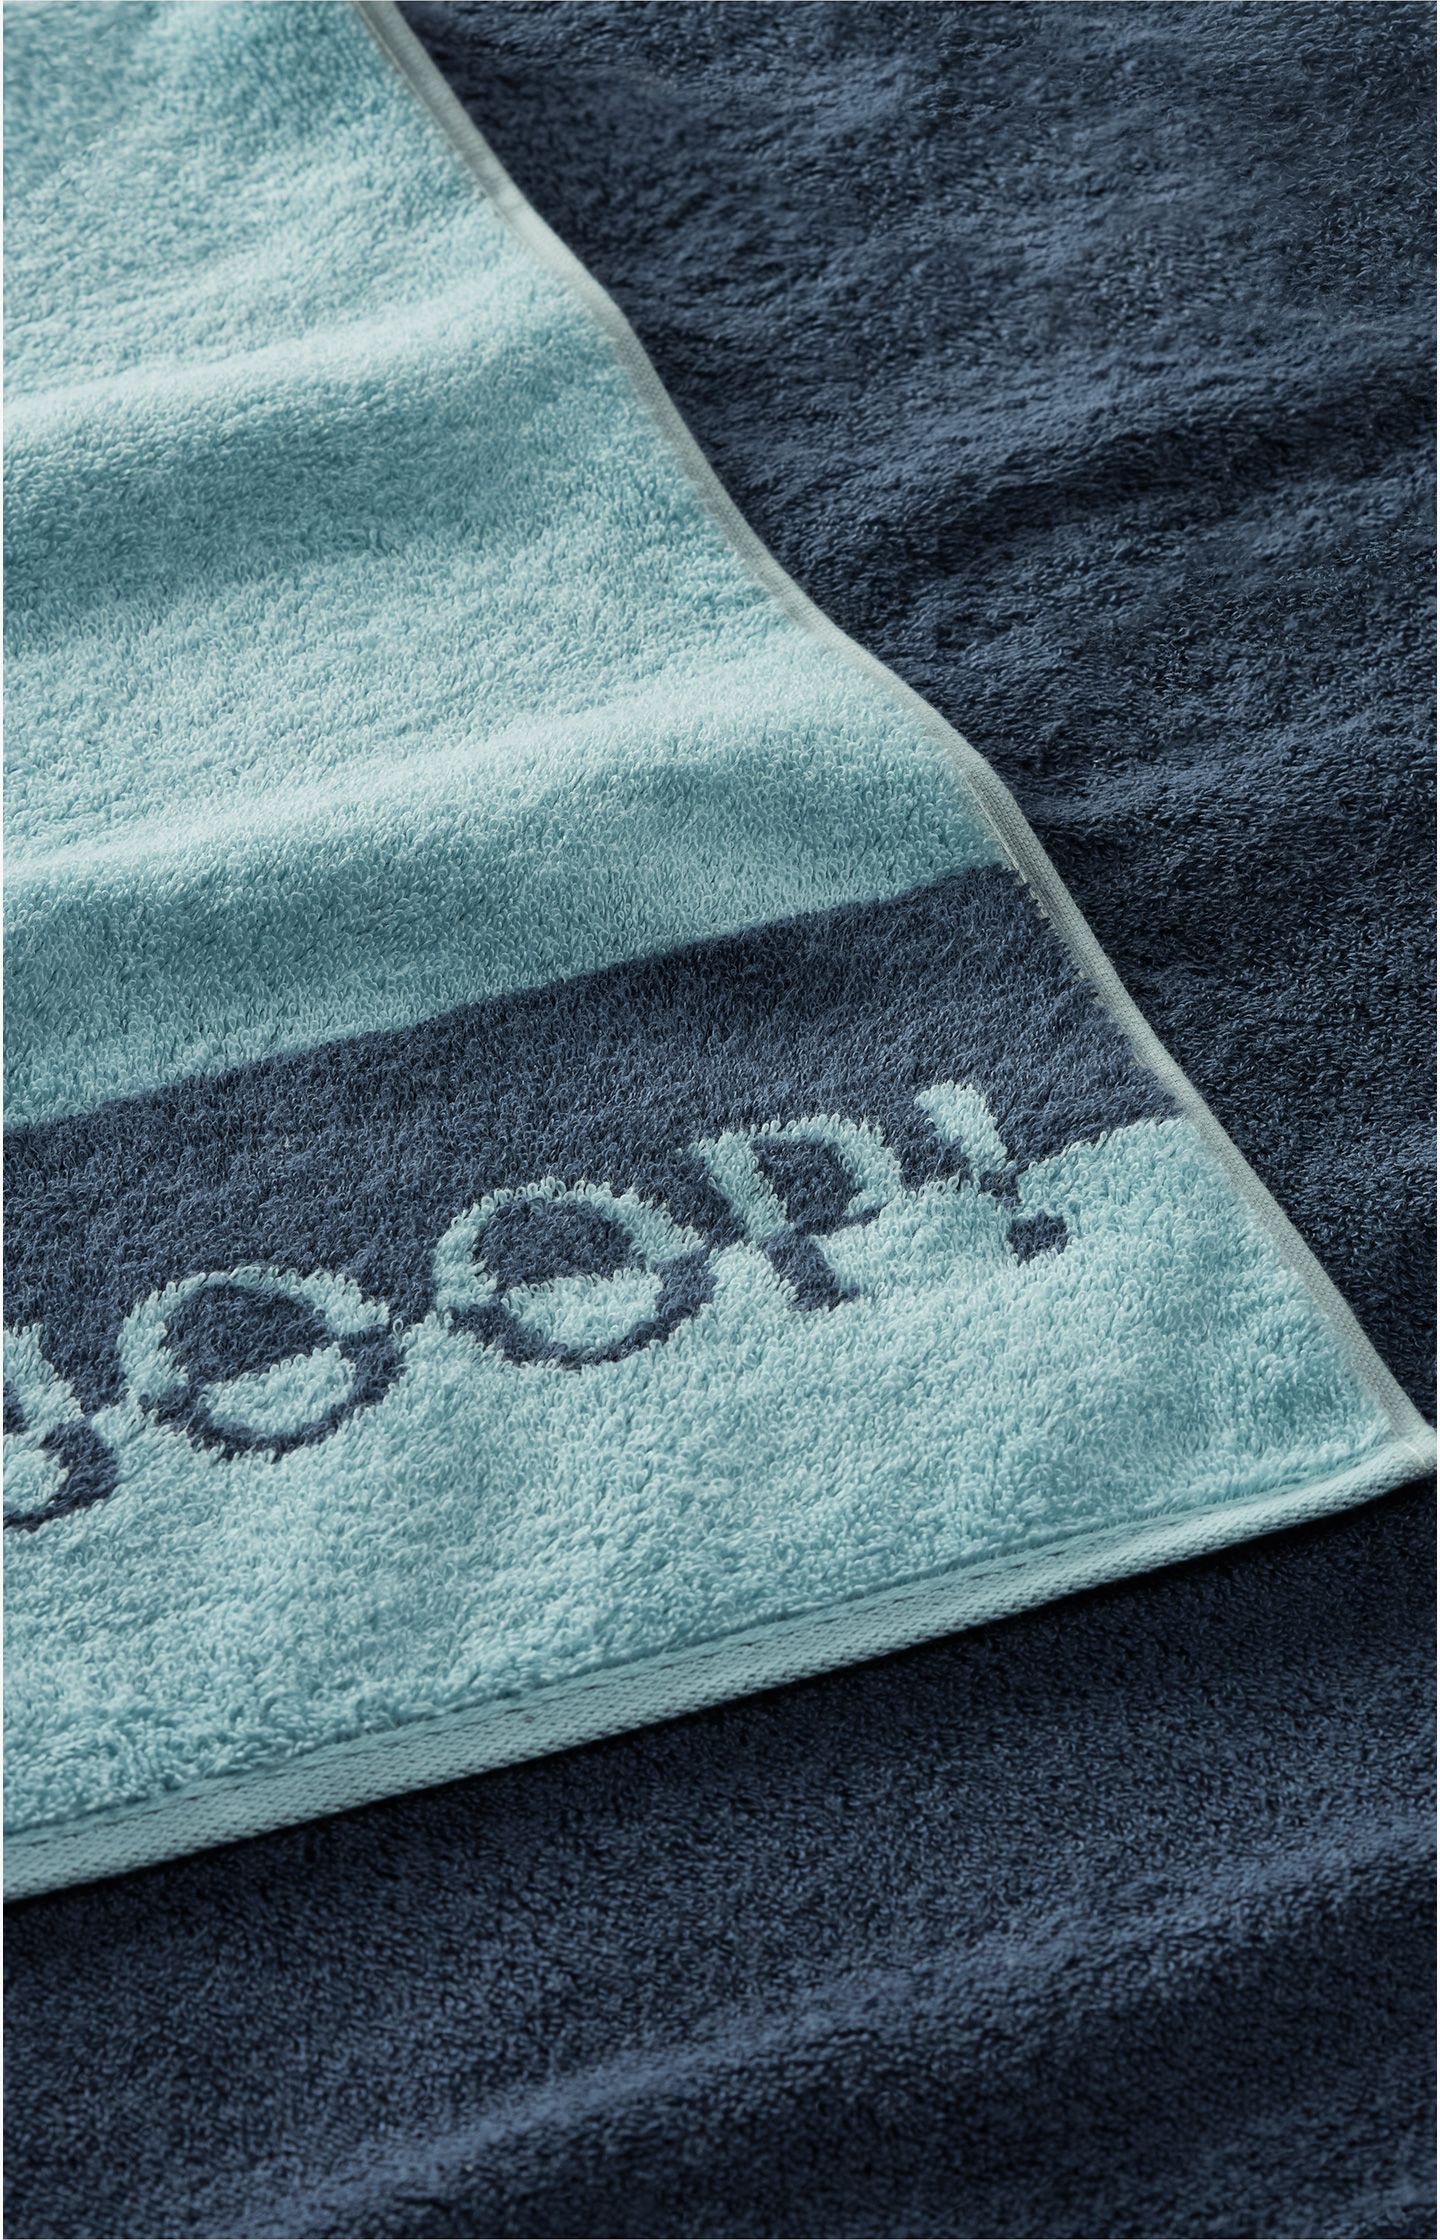 JOOP! SHADES STRIPE Terrycloth Series in Aqua - in the JOOP! Online Shop